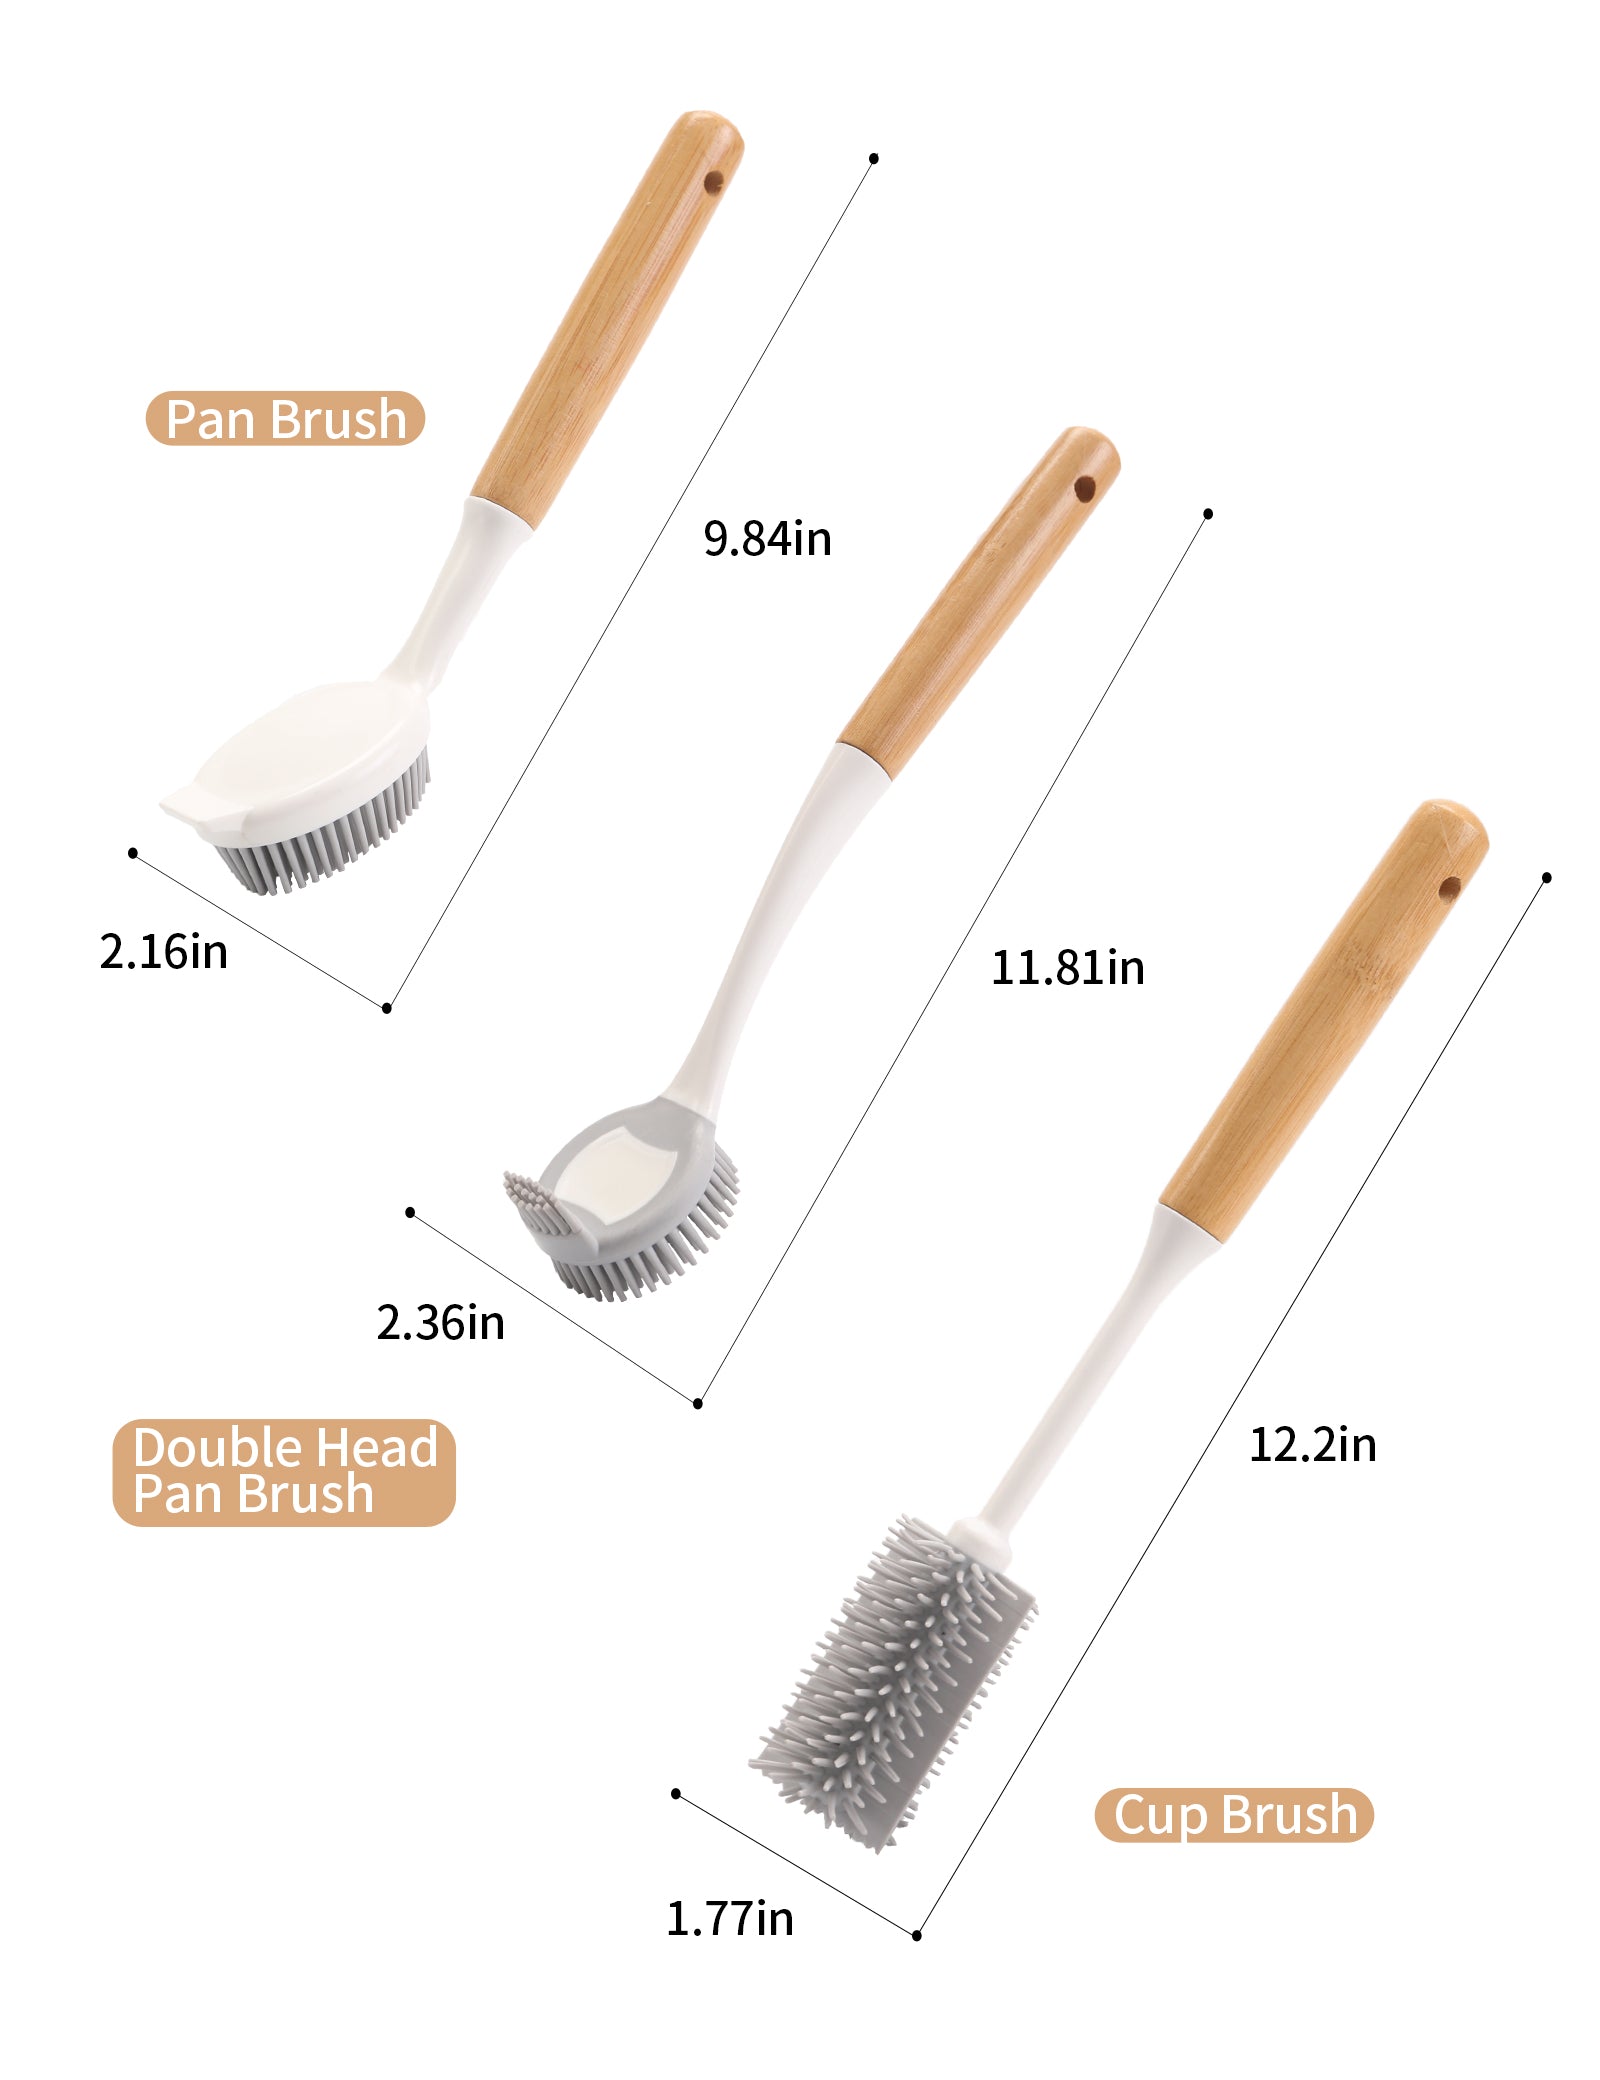 Dish Washing Brush Sisal with Bamboo Handle Dish Scrubber, Scrub Brush for Pans, Pots, Dishwashing and Cleaning Brushes (Square Brush and Short